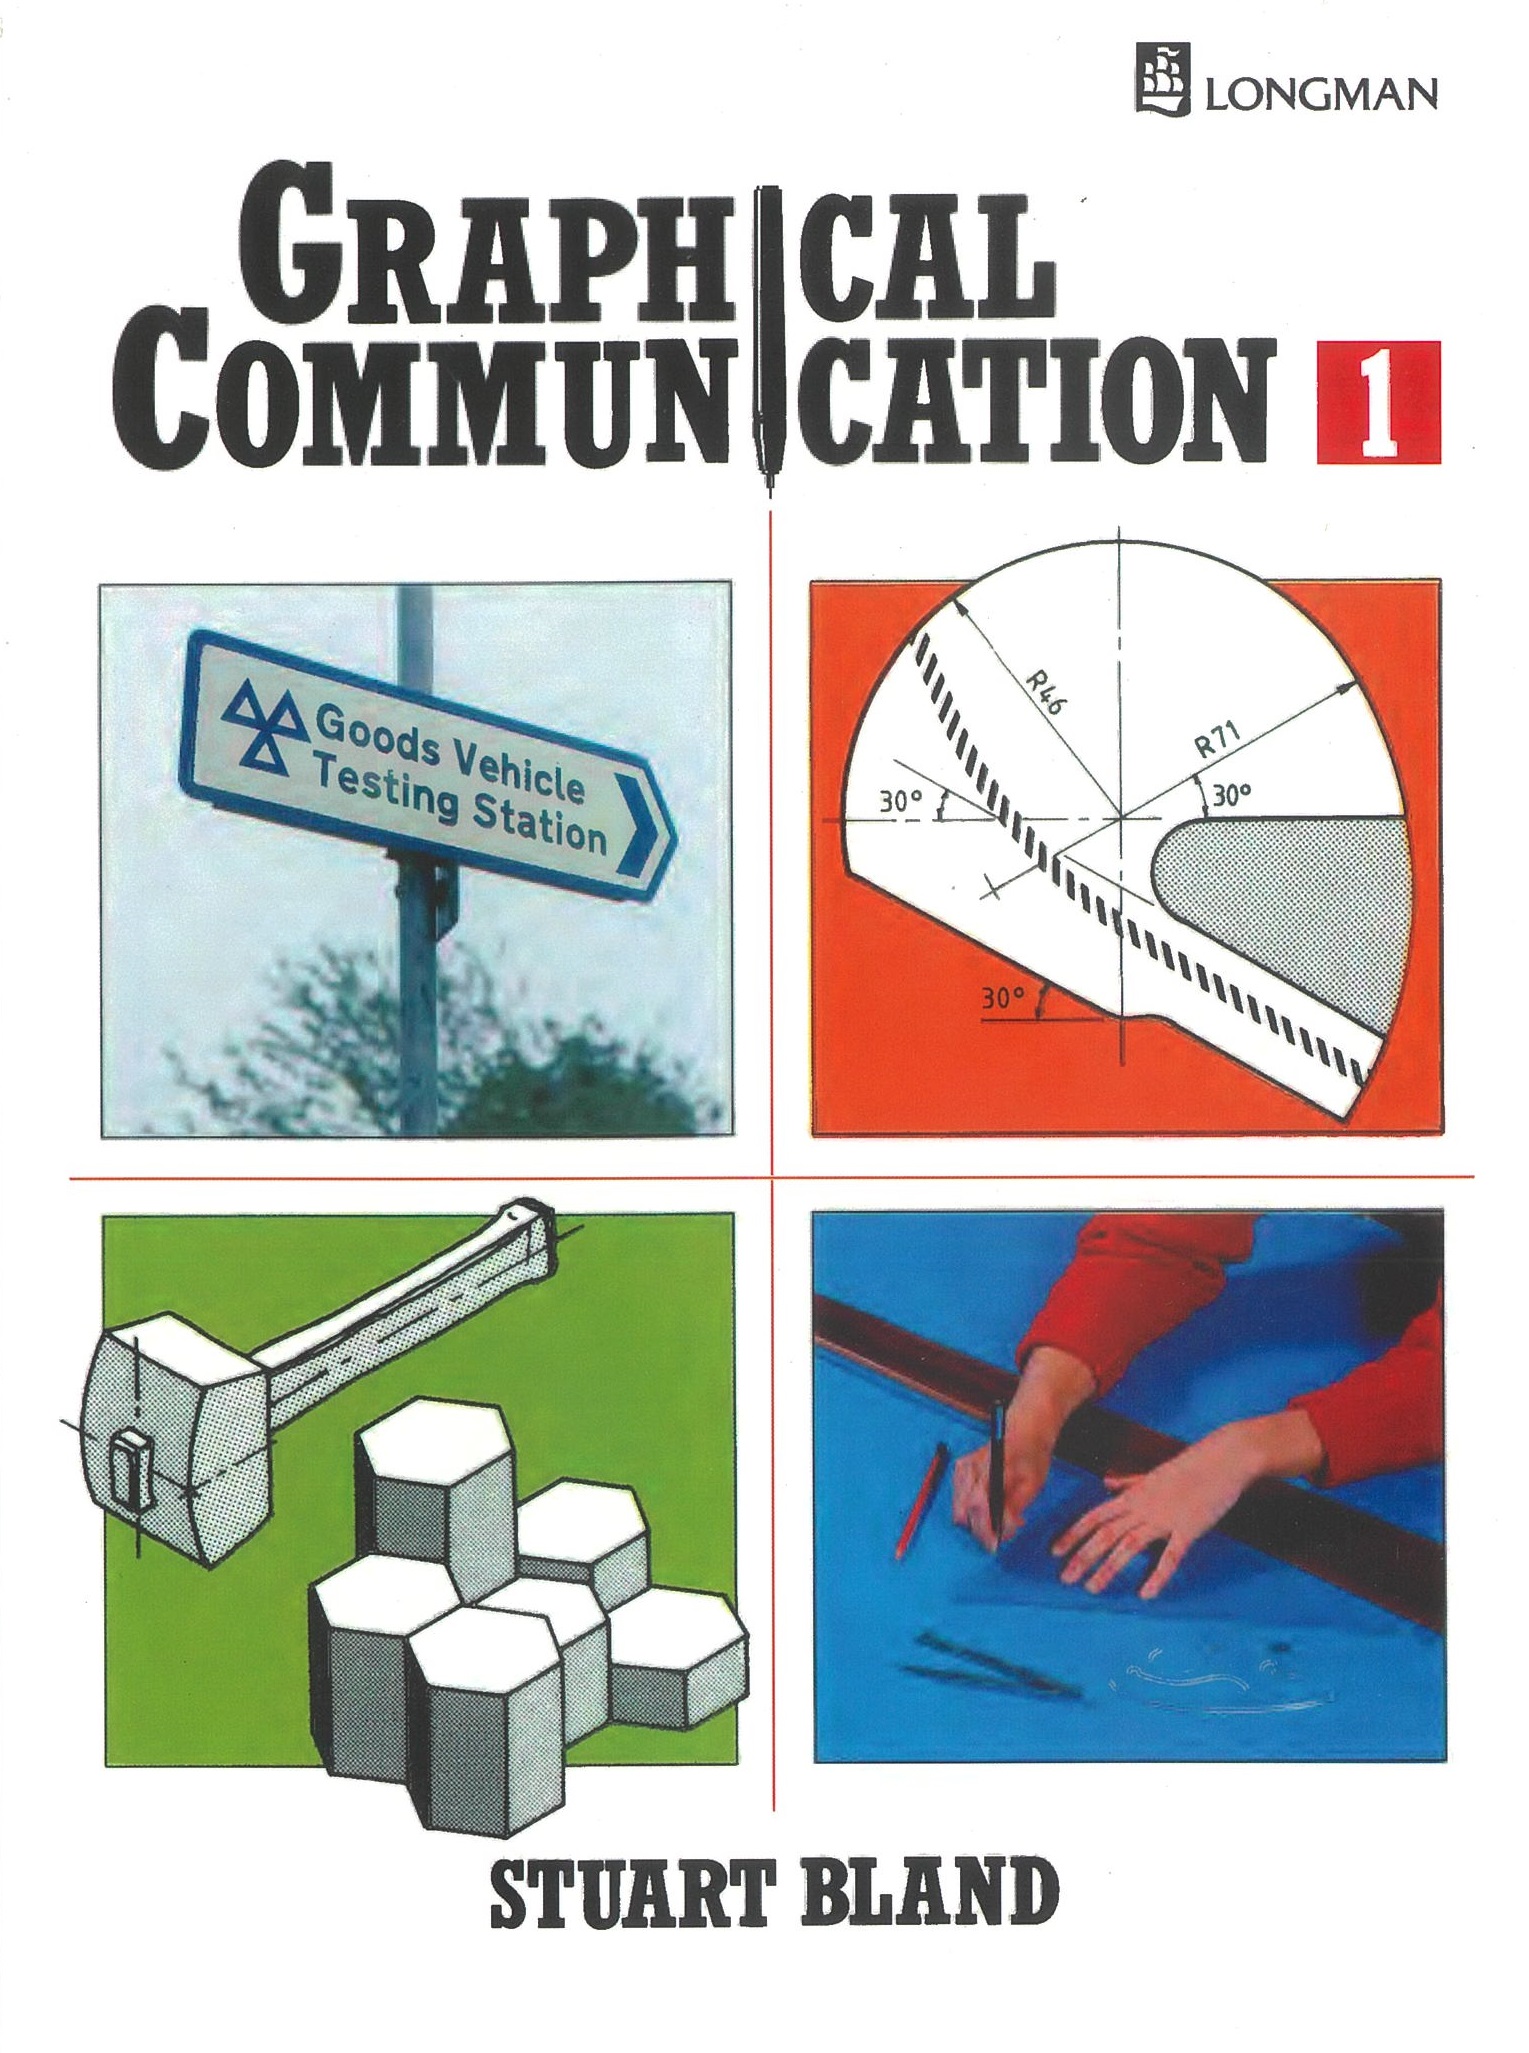 GRAPHICAL COMMUNICATION BOOK 1 - STUART BLAND